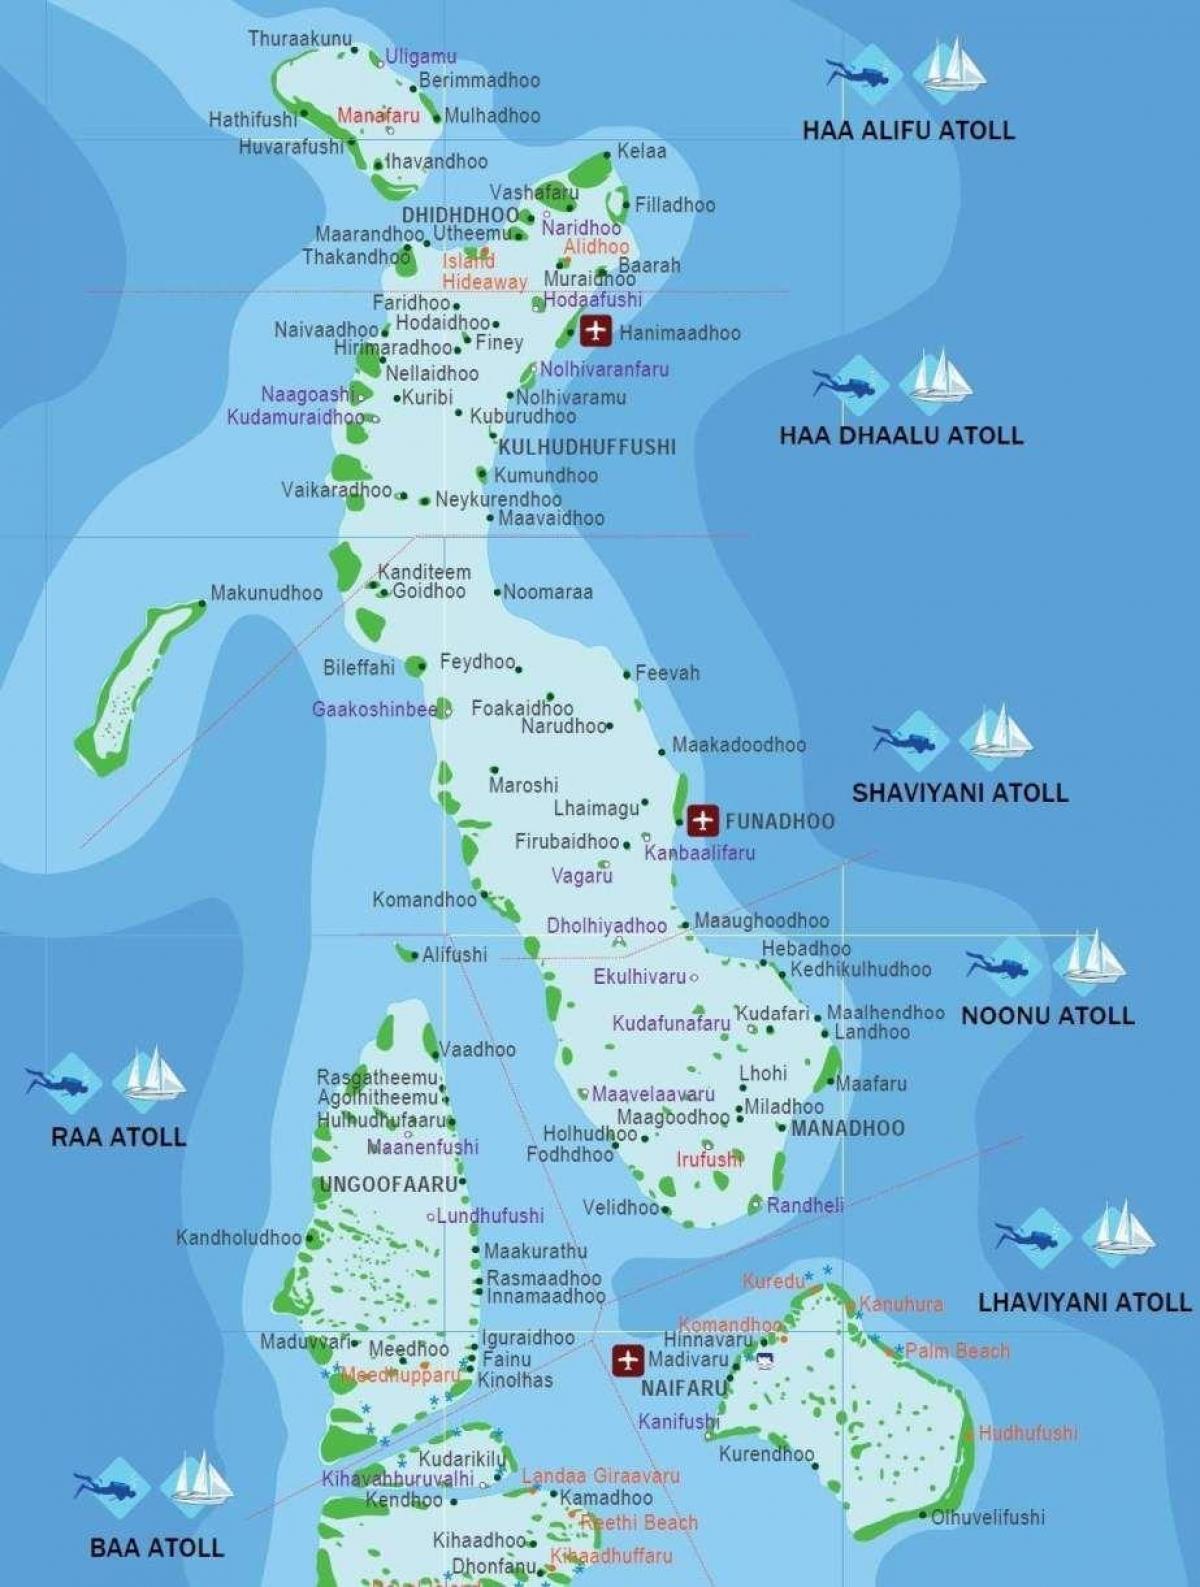 иле Малдиви мапи